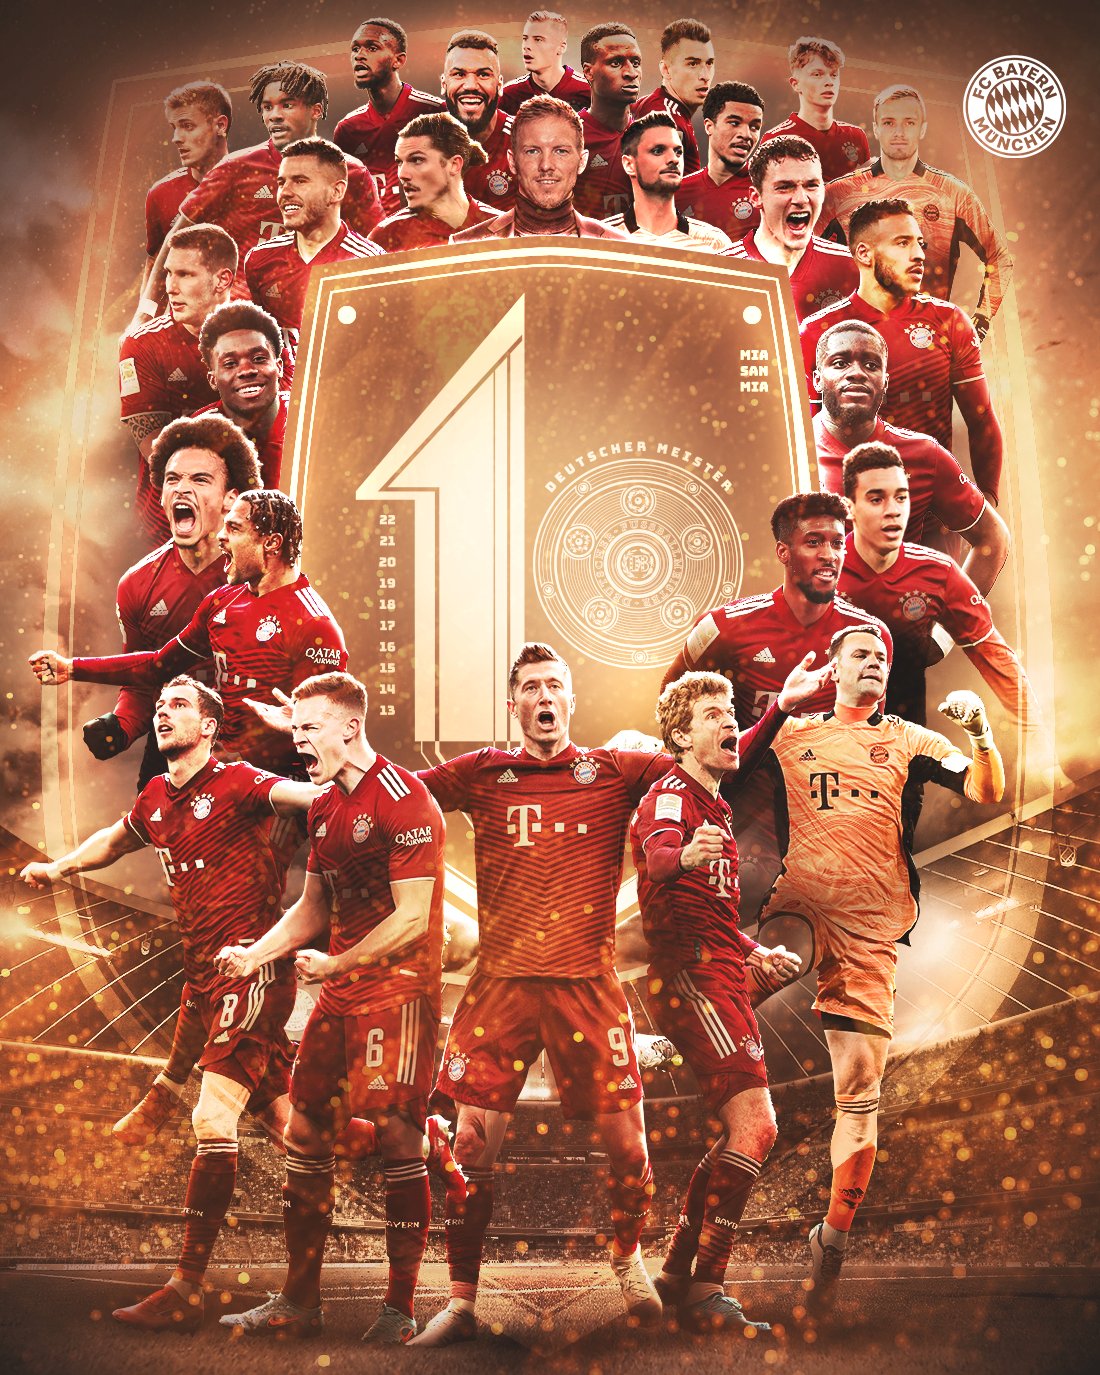 Bayern Munich on Twitter: "A record-setting TEN Bundesliga titles in a row 🏆🤩 #MISS10N #MiaSanMeister https://t.co/j1GFEdTR3J" / Twitter